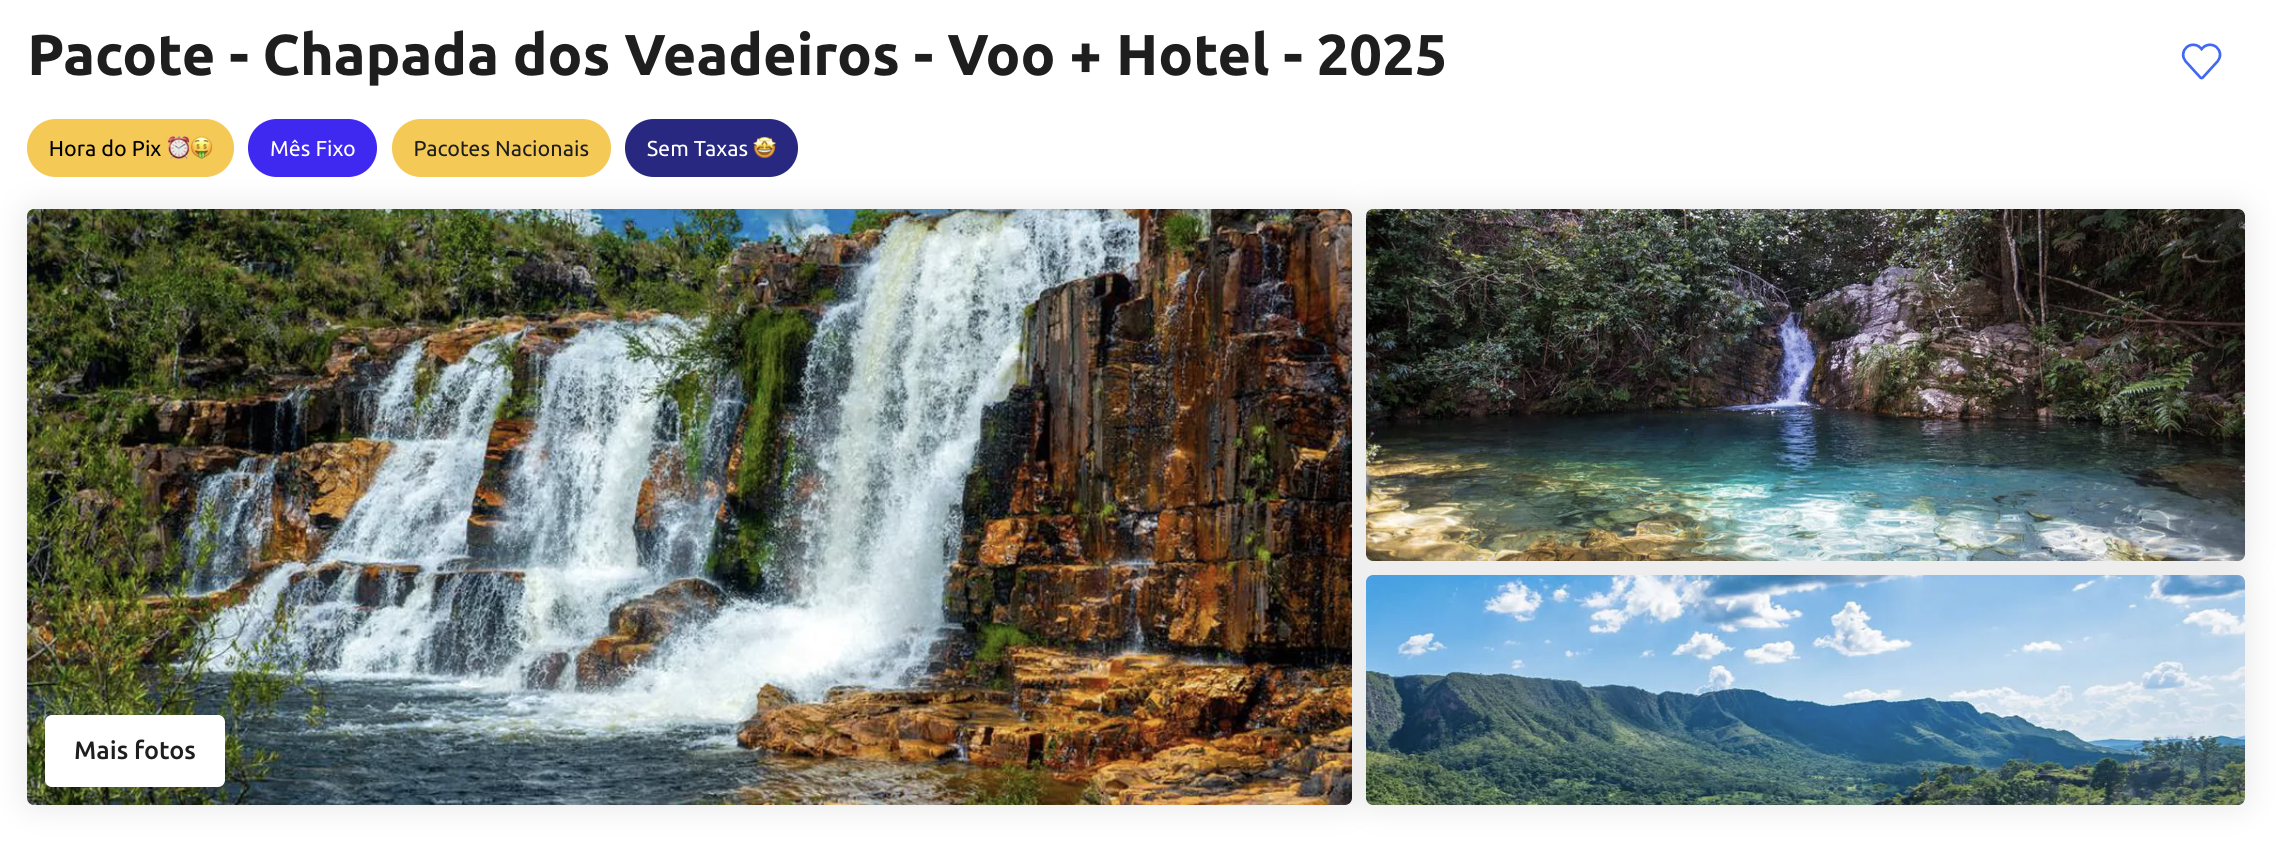 Pacote - Chapada dos Veadeiros - Voo + Hotel - 2025